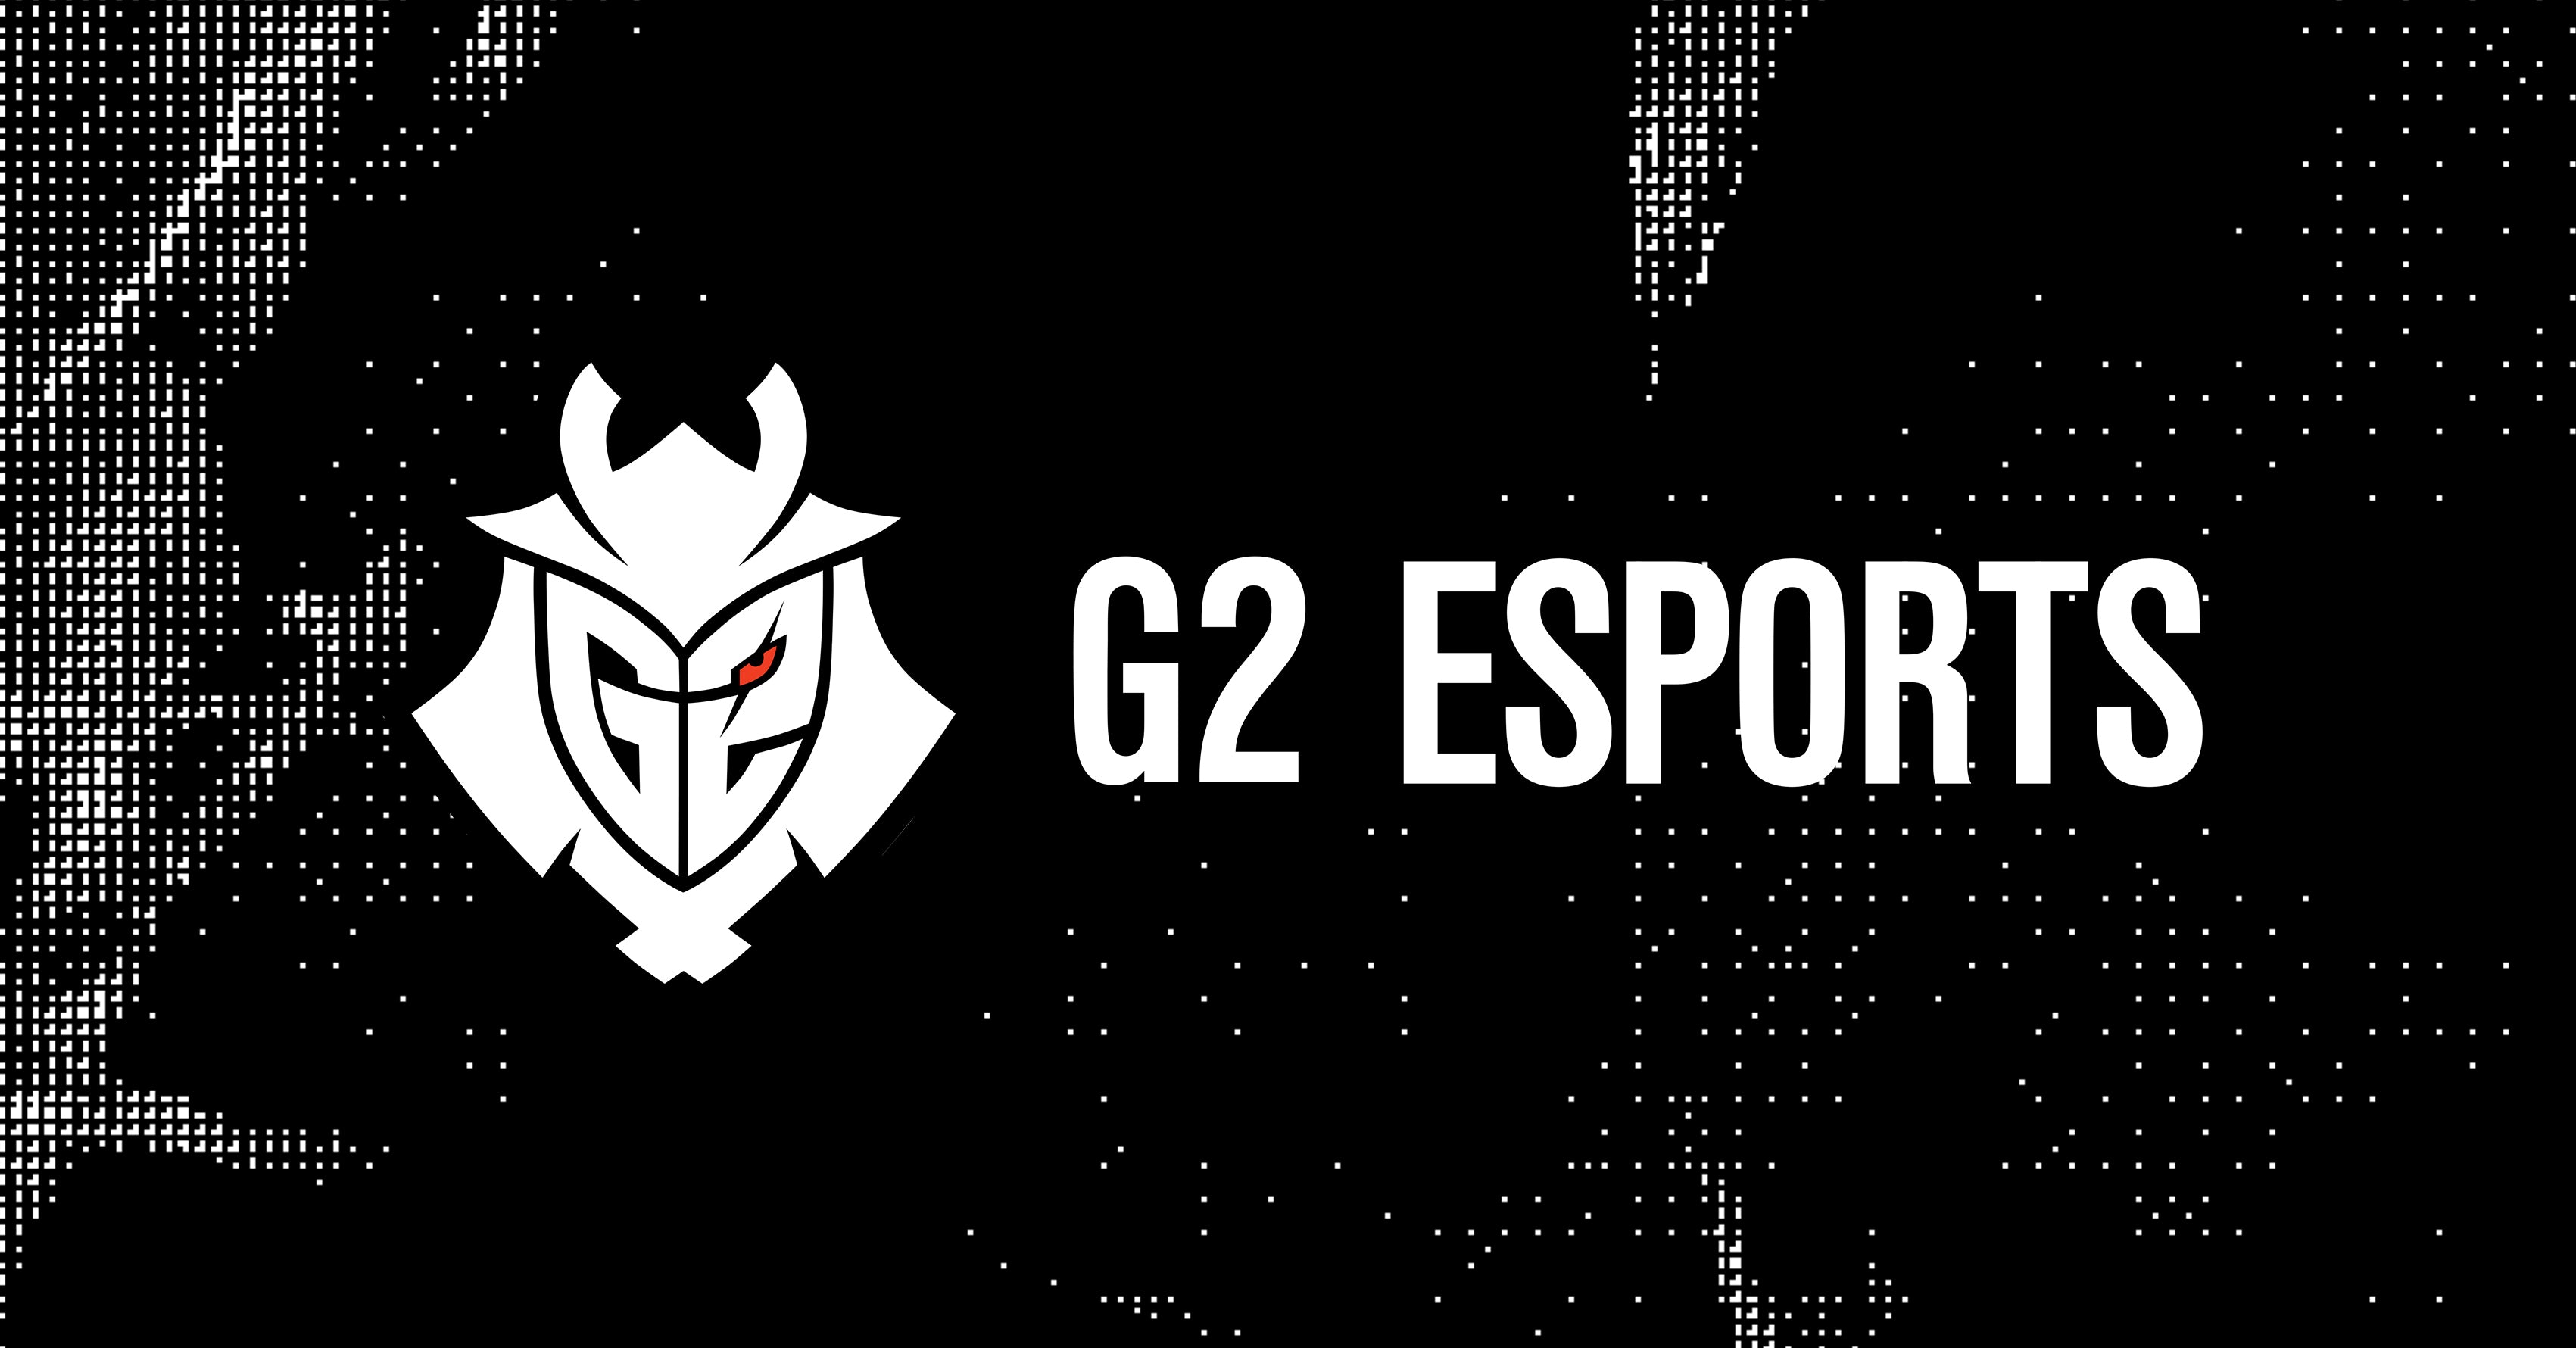 (c) G2esports.com